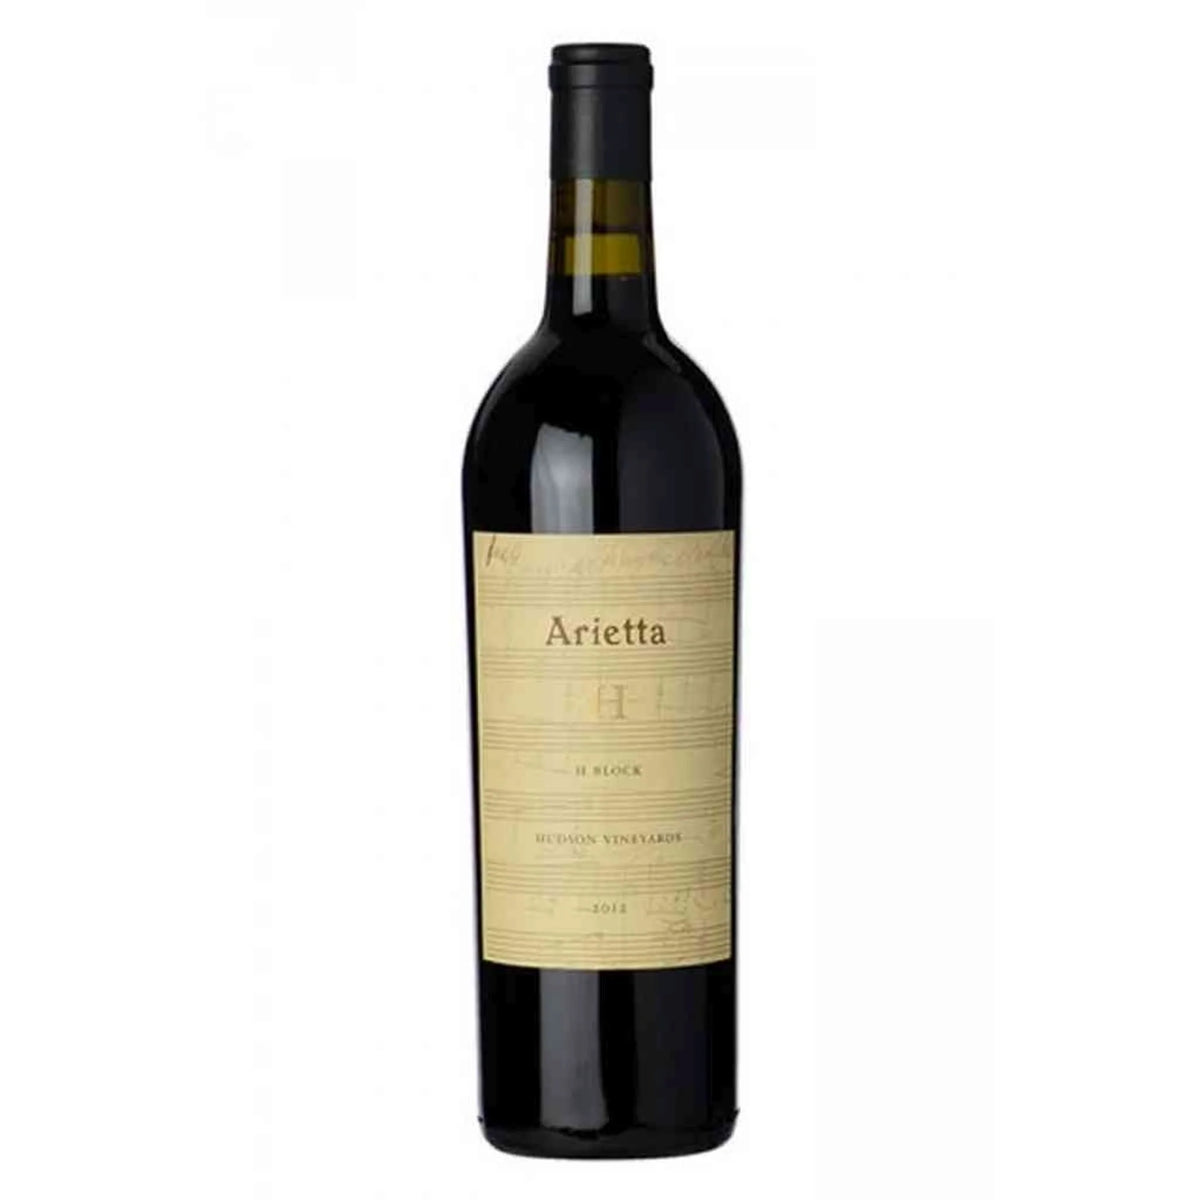 Arietta-Rotwein-Cabernet Franc, Merlot-2014 Red Wine H Block Hudson-WINECOM